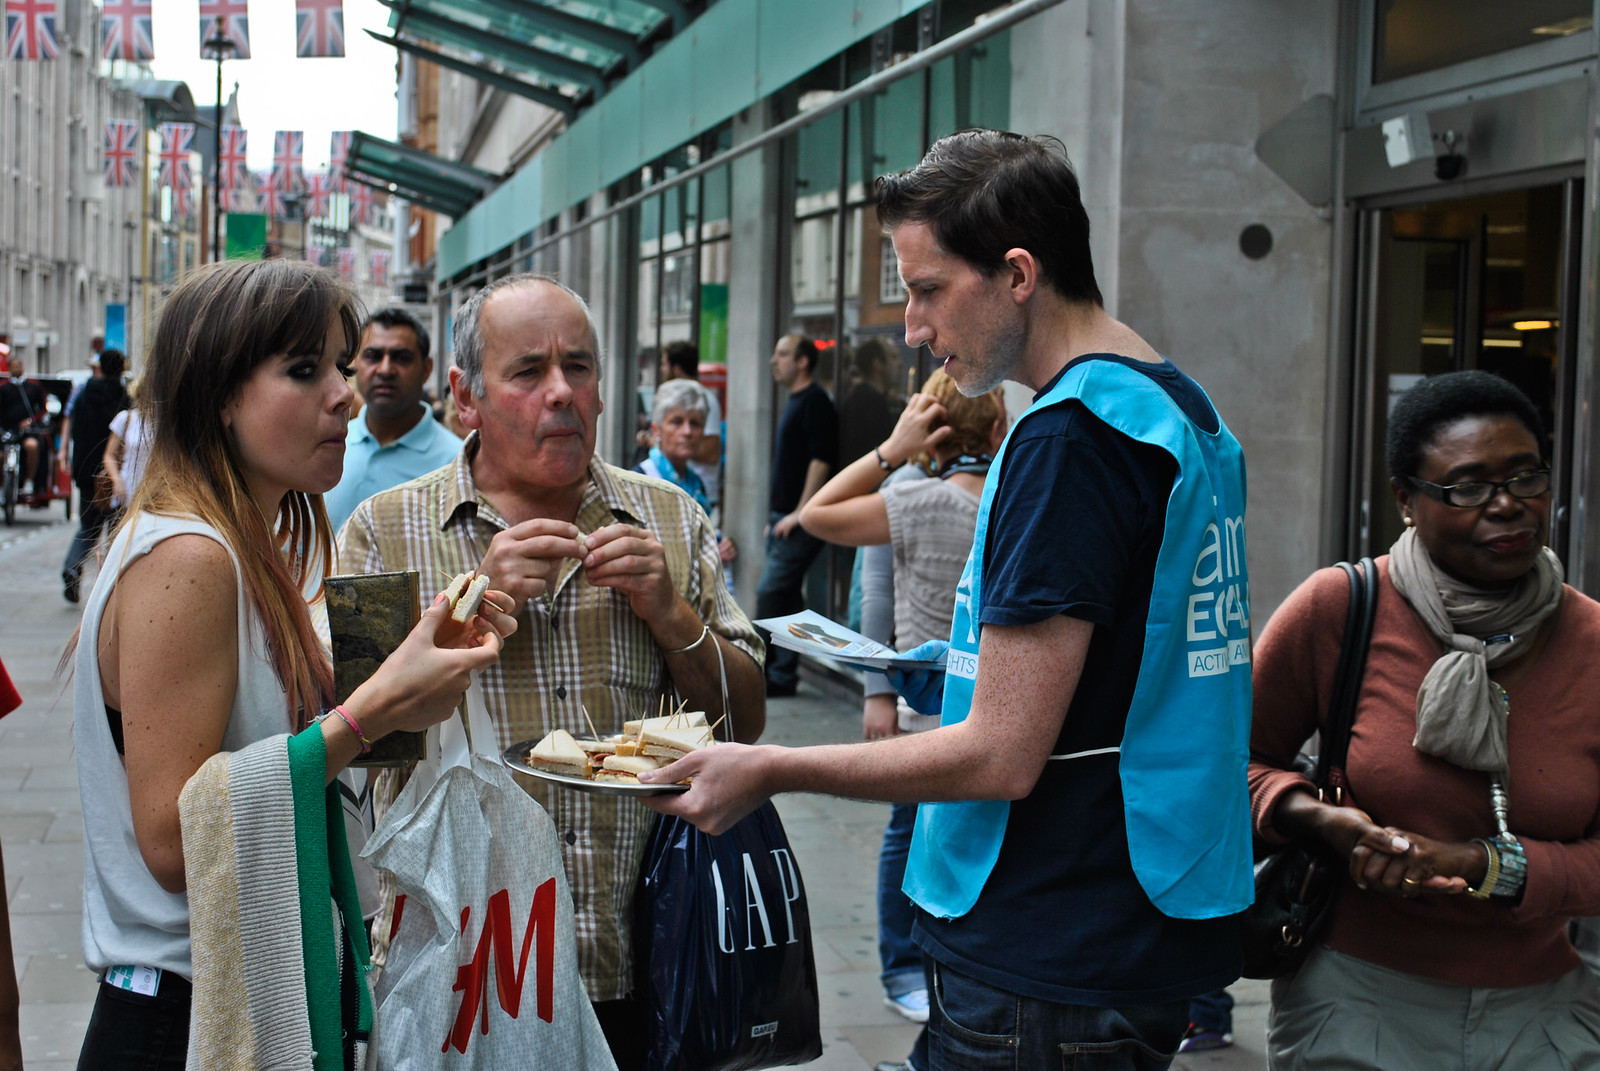 01/09/2012 - London - Free Vegan Bacon Giveaway